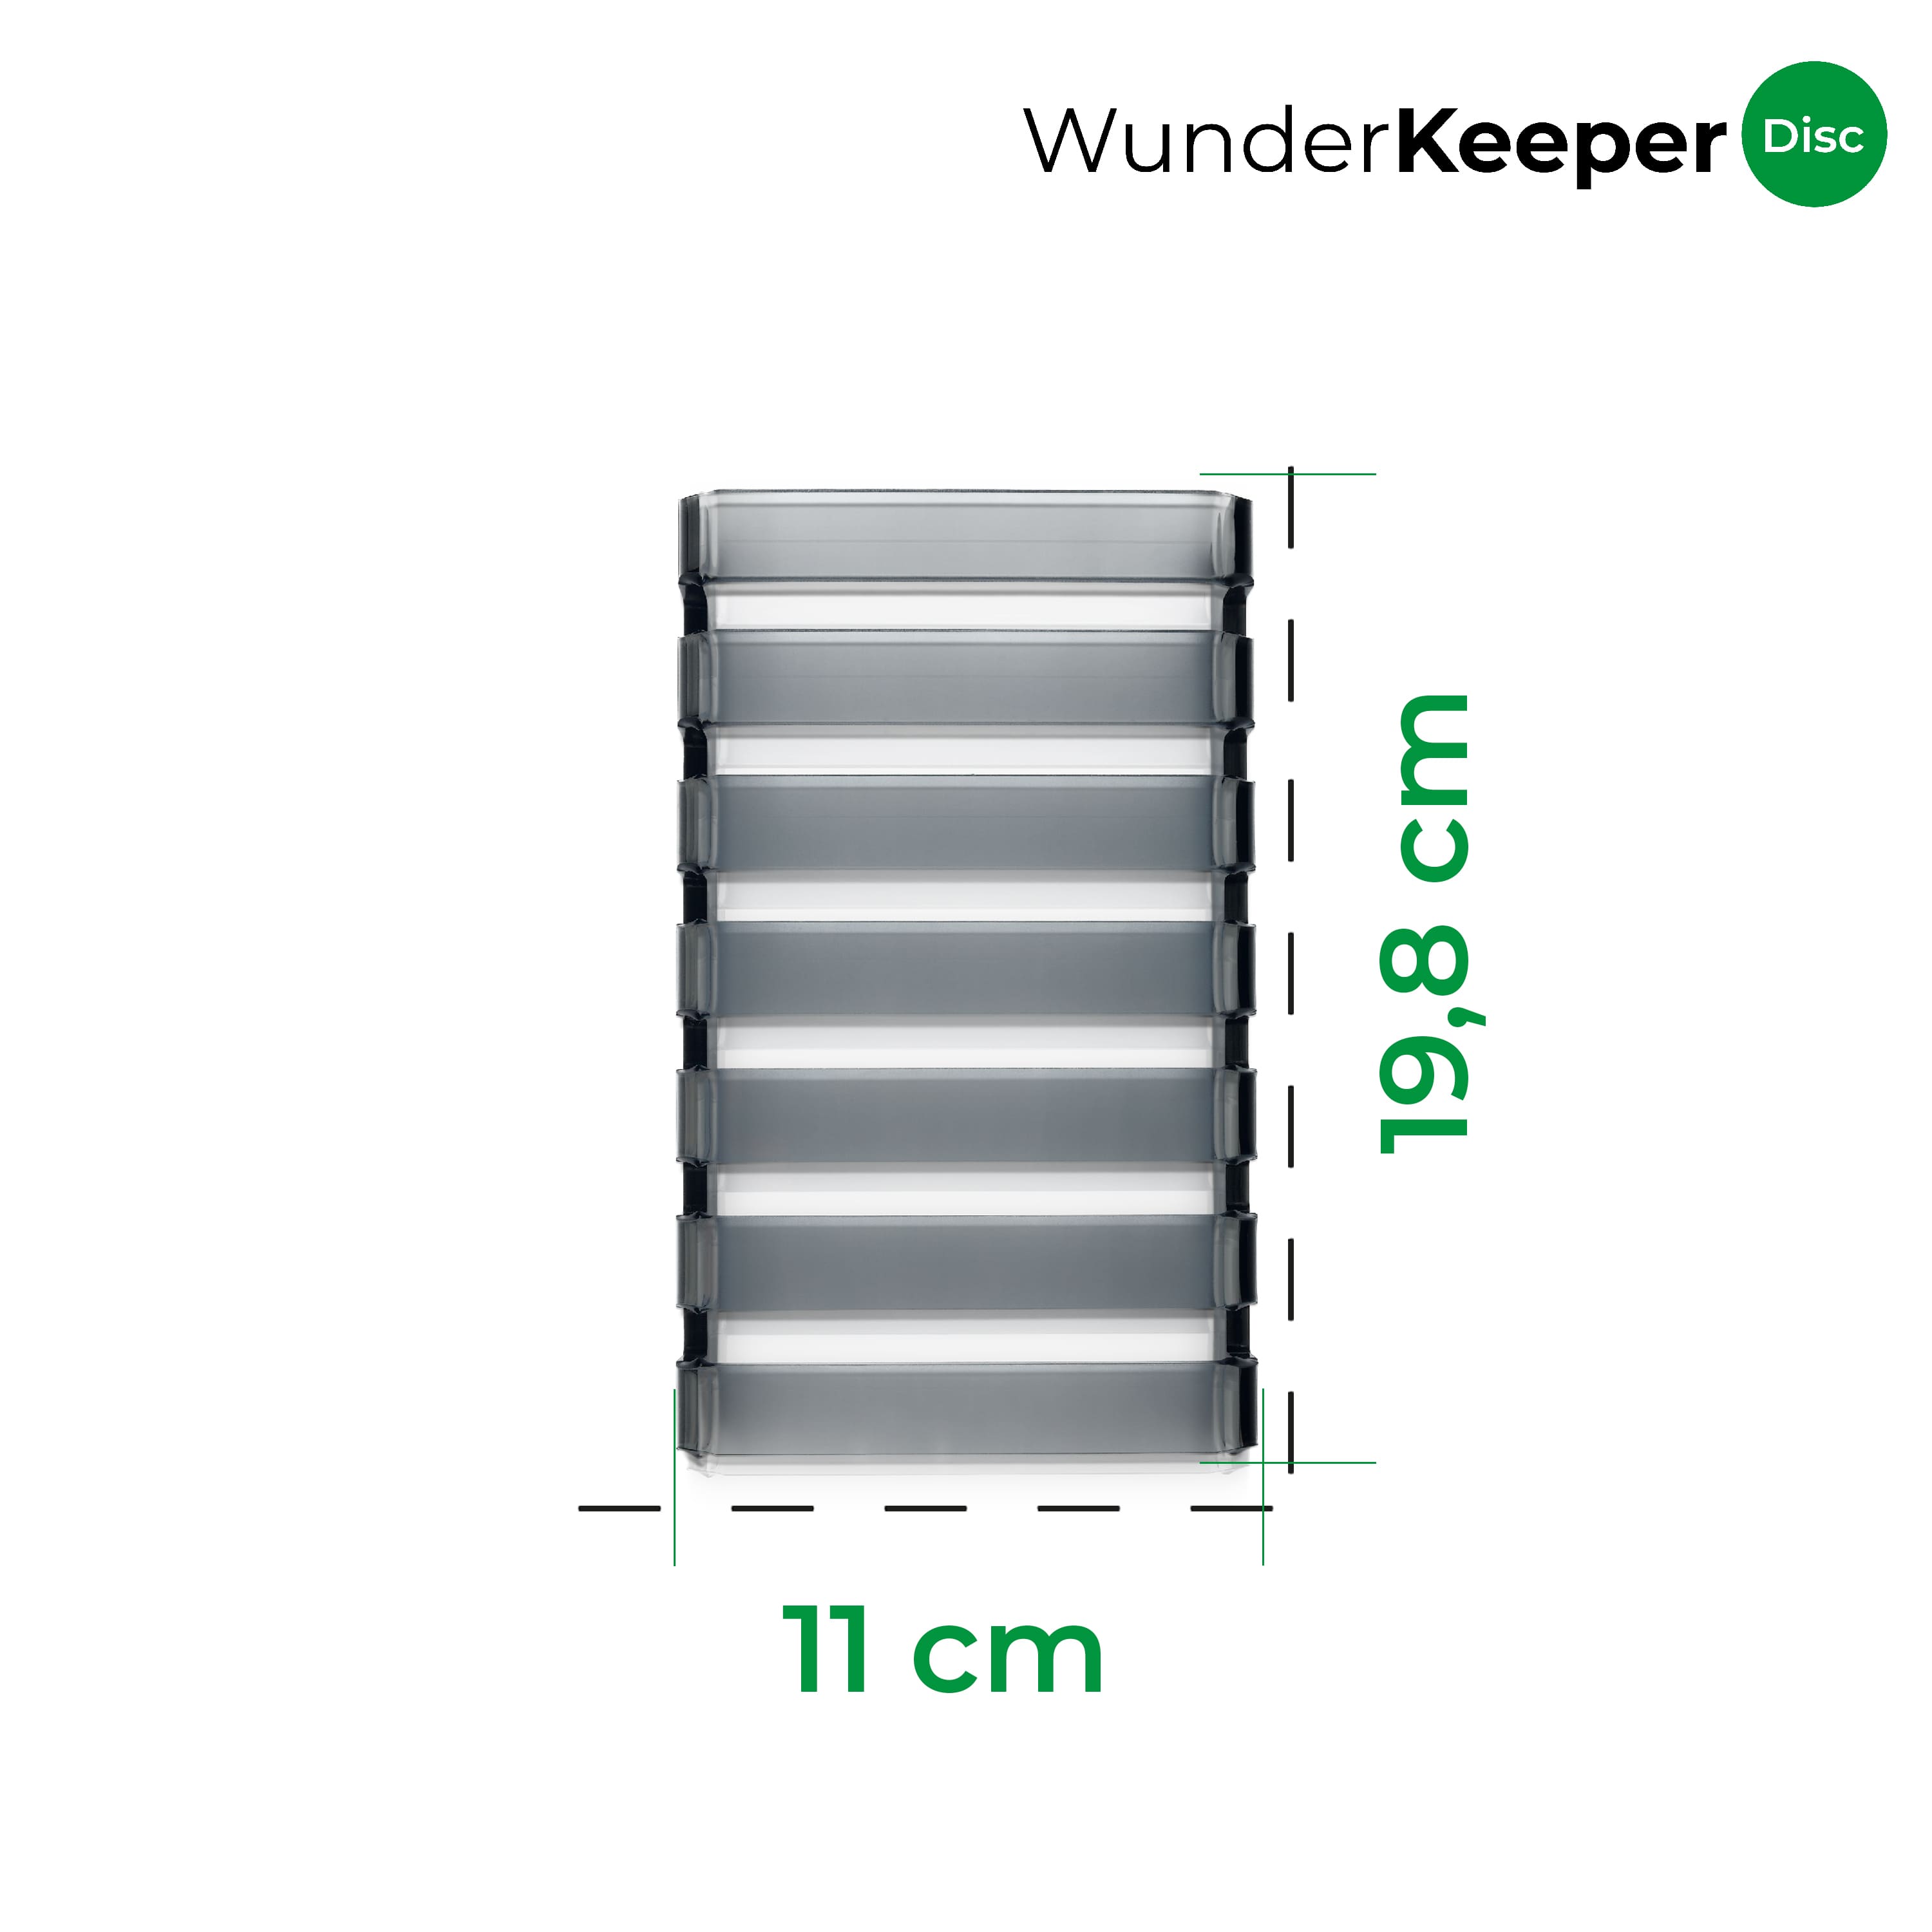 WunderKeeper® Disc | Disc holder for WunderSlicer cutting discs, WunderPeeler, WunderPlate